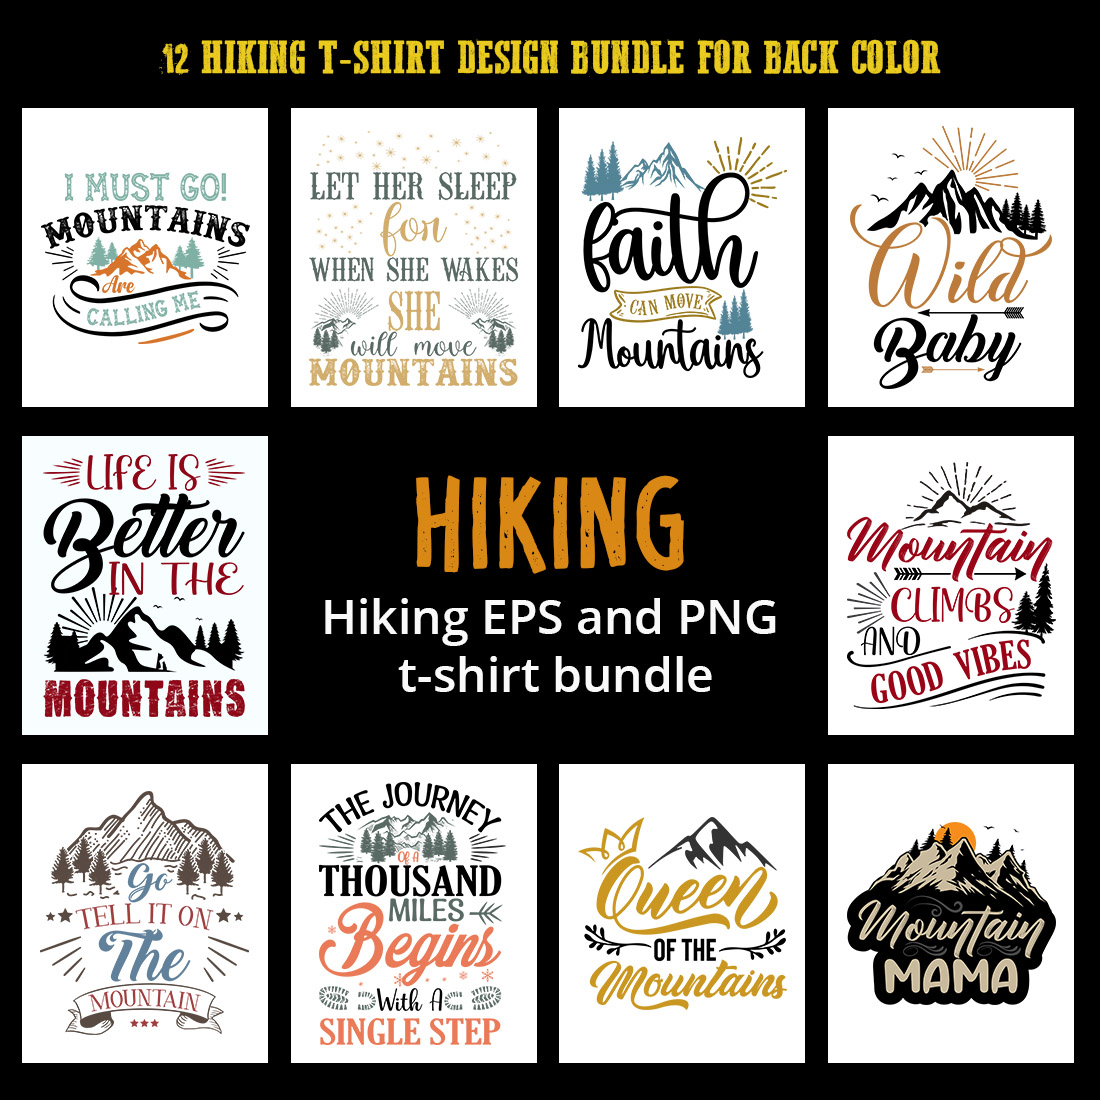 Hiking T-shirt design Bundle preview image.